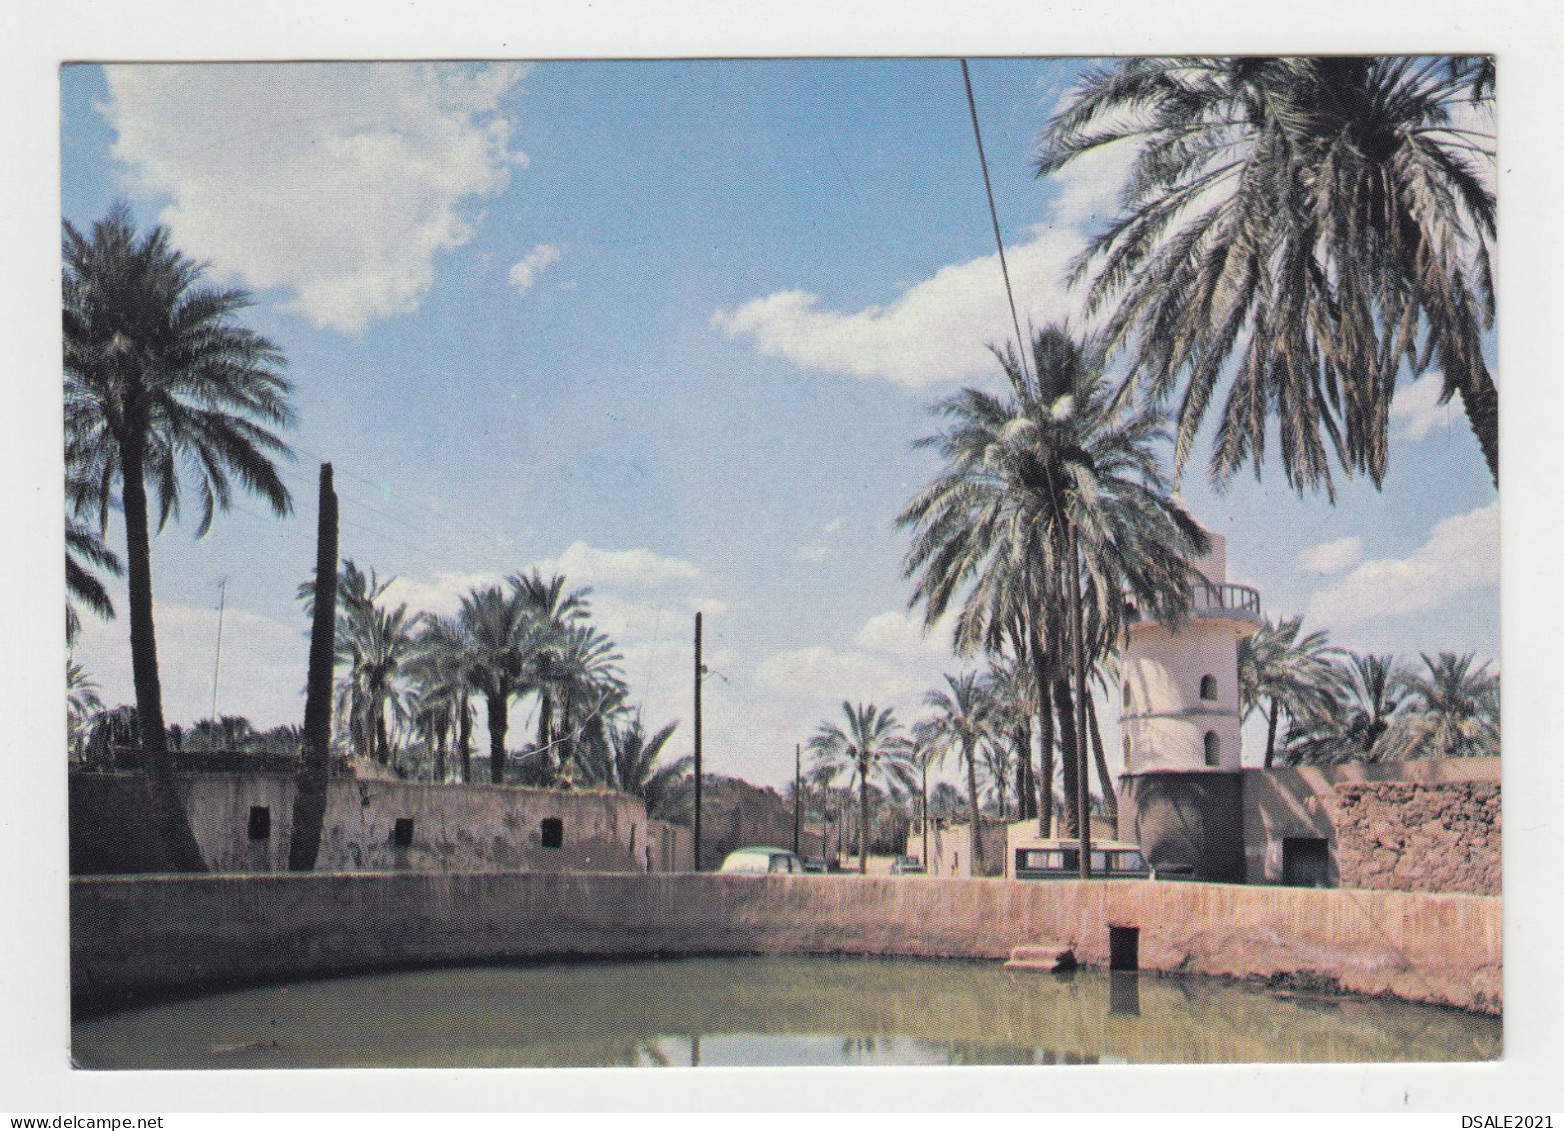 Libya Libia, Oasis Of The Many, In Al Jamahiriya, View Vintage Photo Postcard RPPc (4153) - Libia